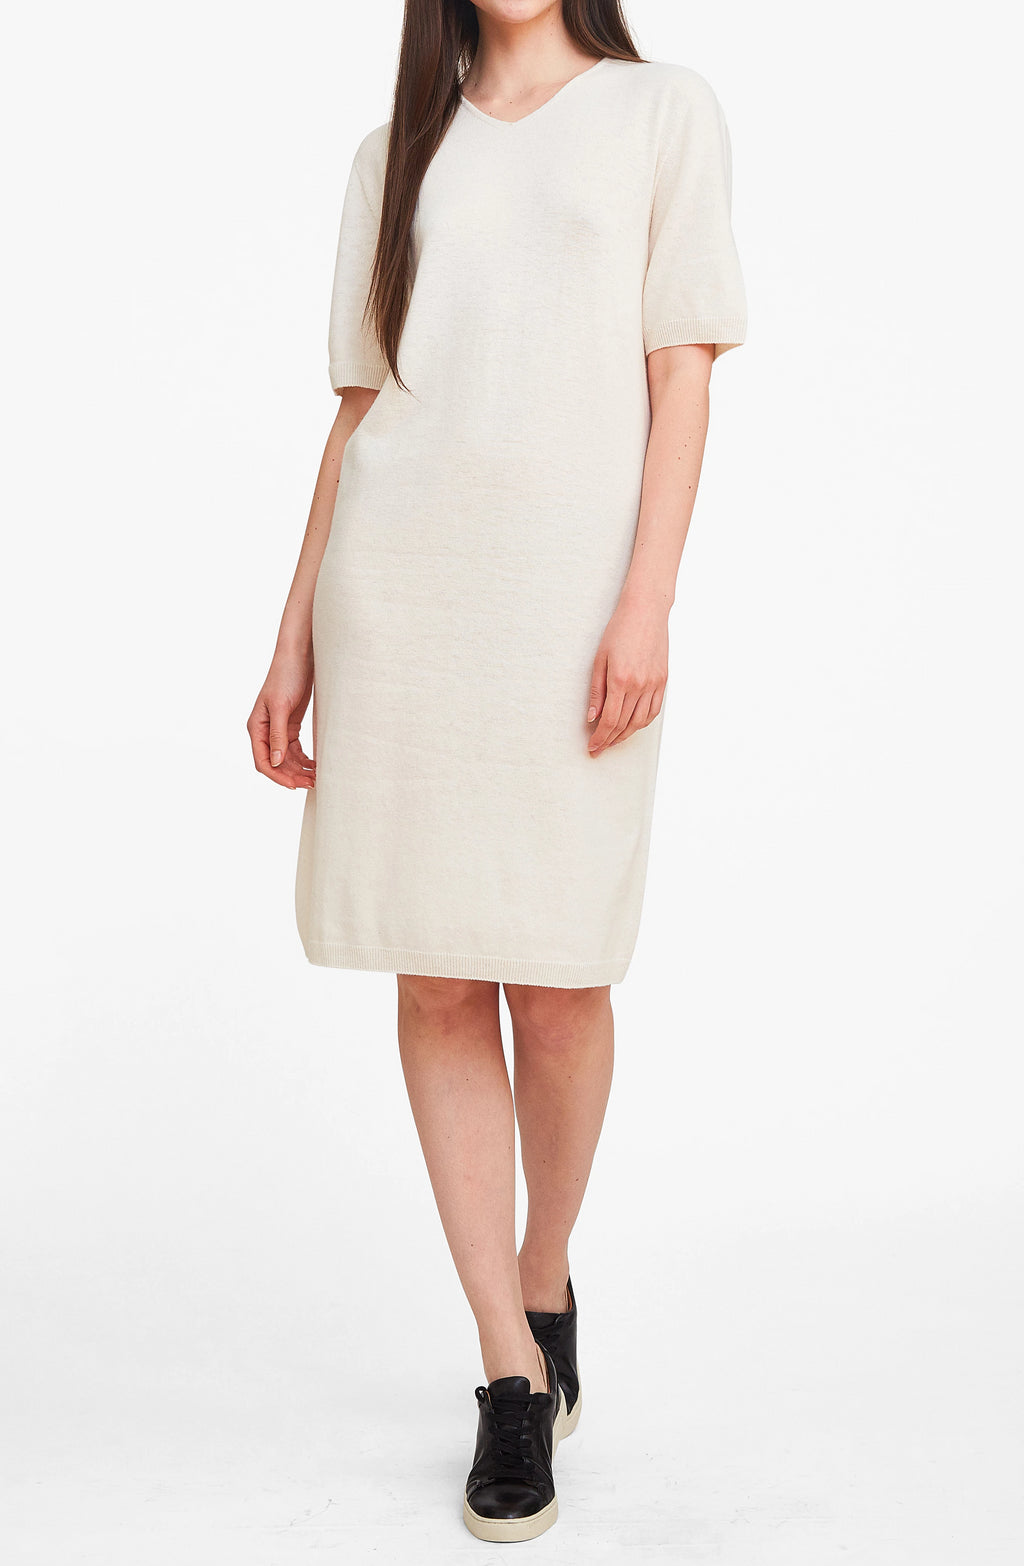 Simply Classy Sweater Dress - Ivory